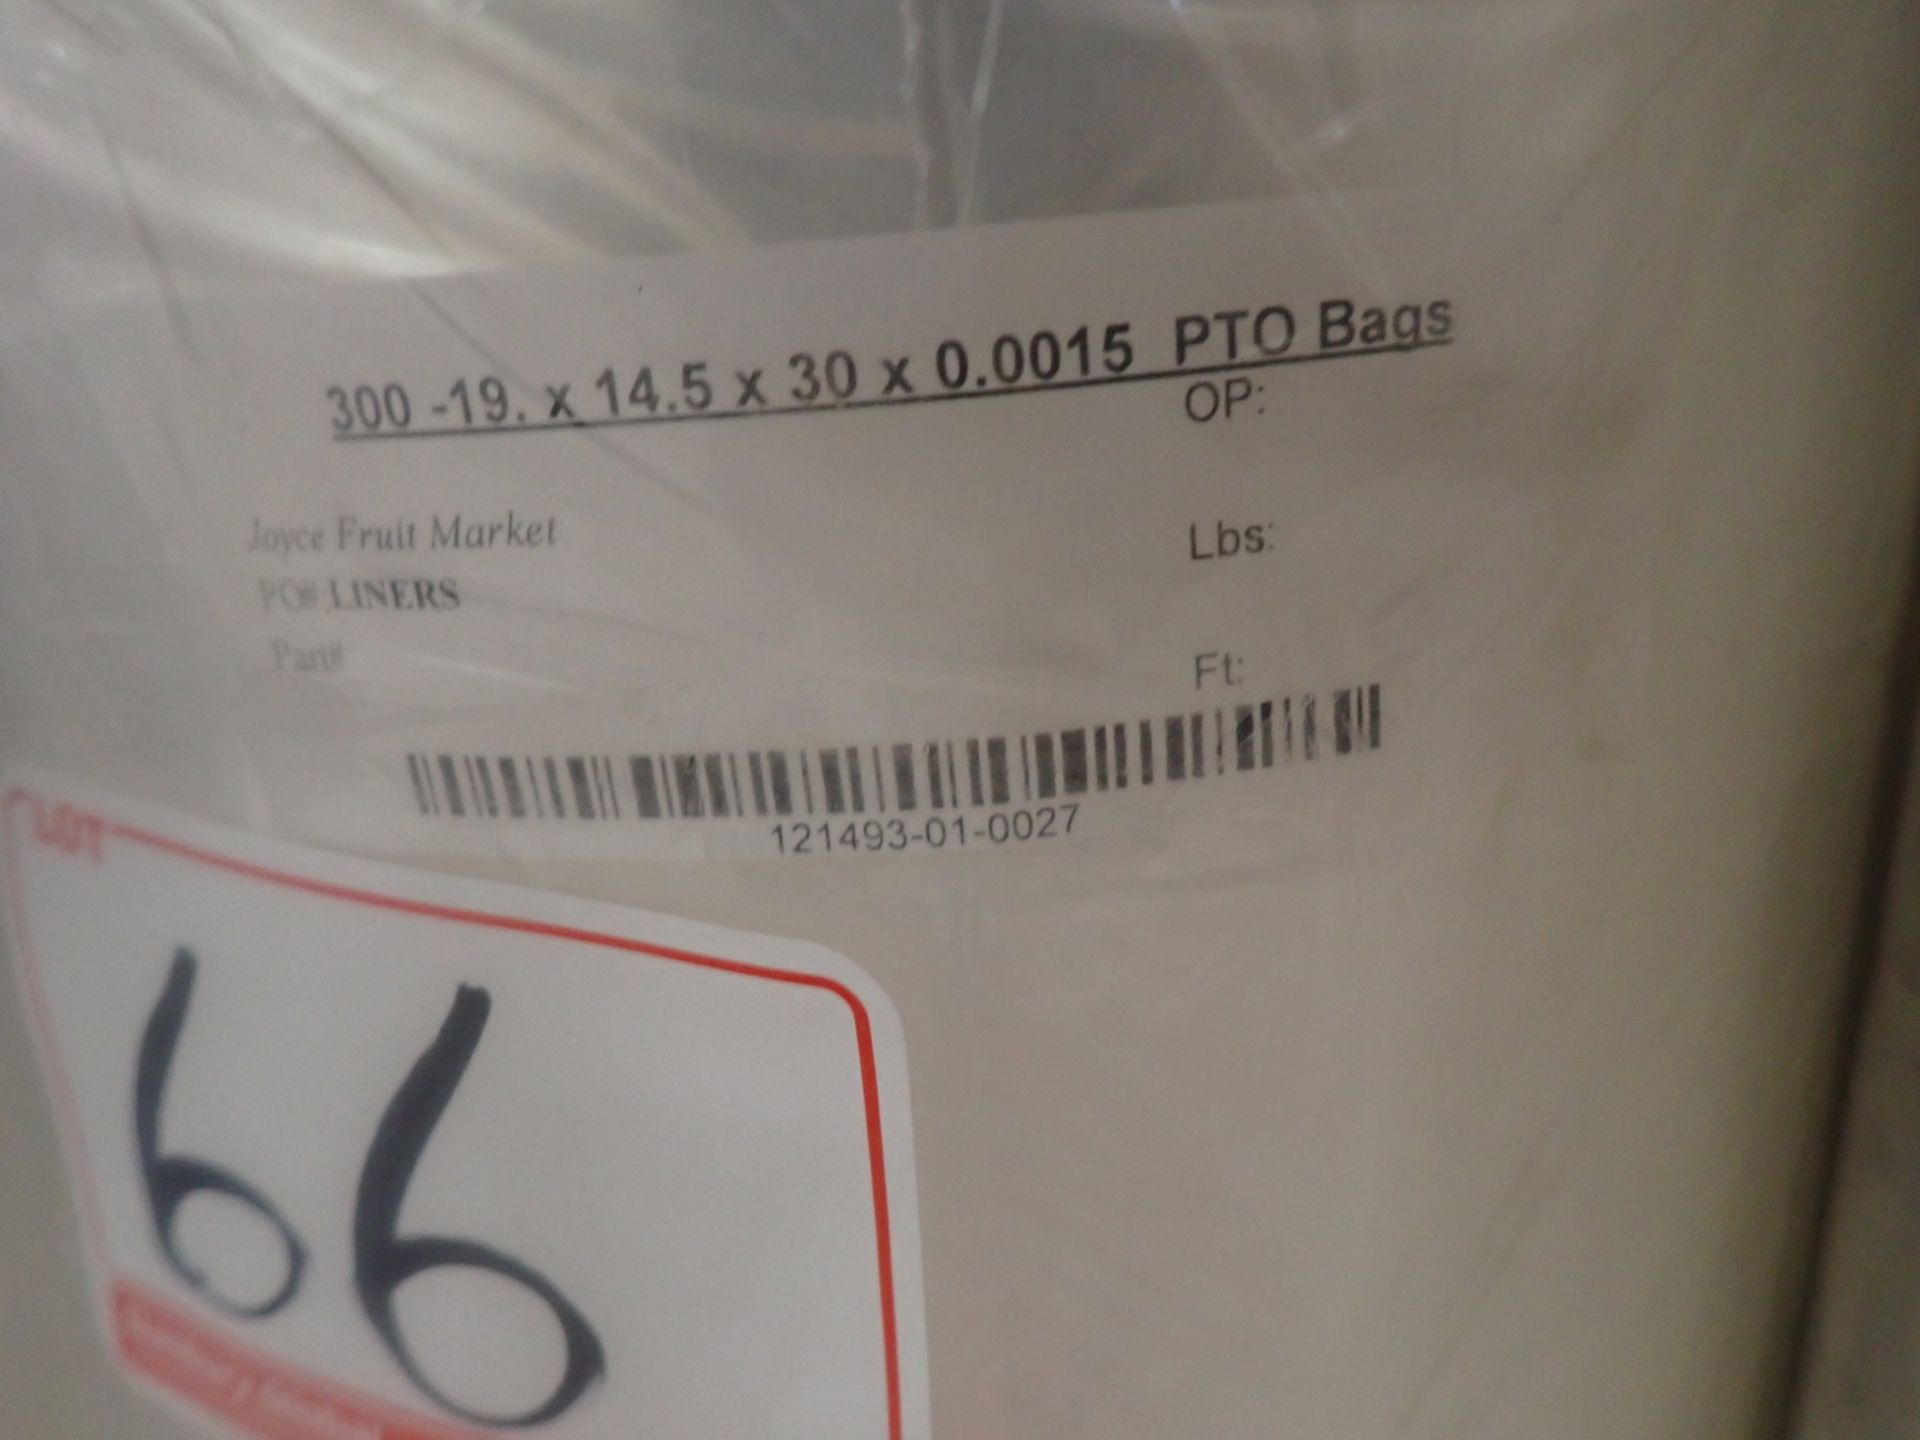 LOT - PLASTIC 19 X 14.5 X 30 X 0.0015 PTO BAGS (9 ROLLS) - Image 2 of 2